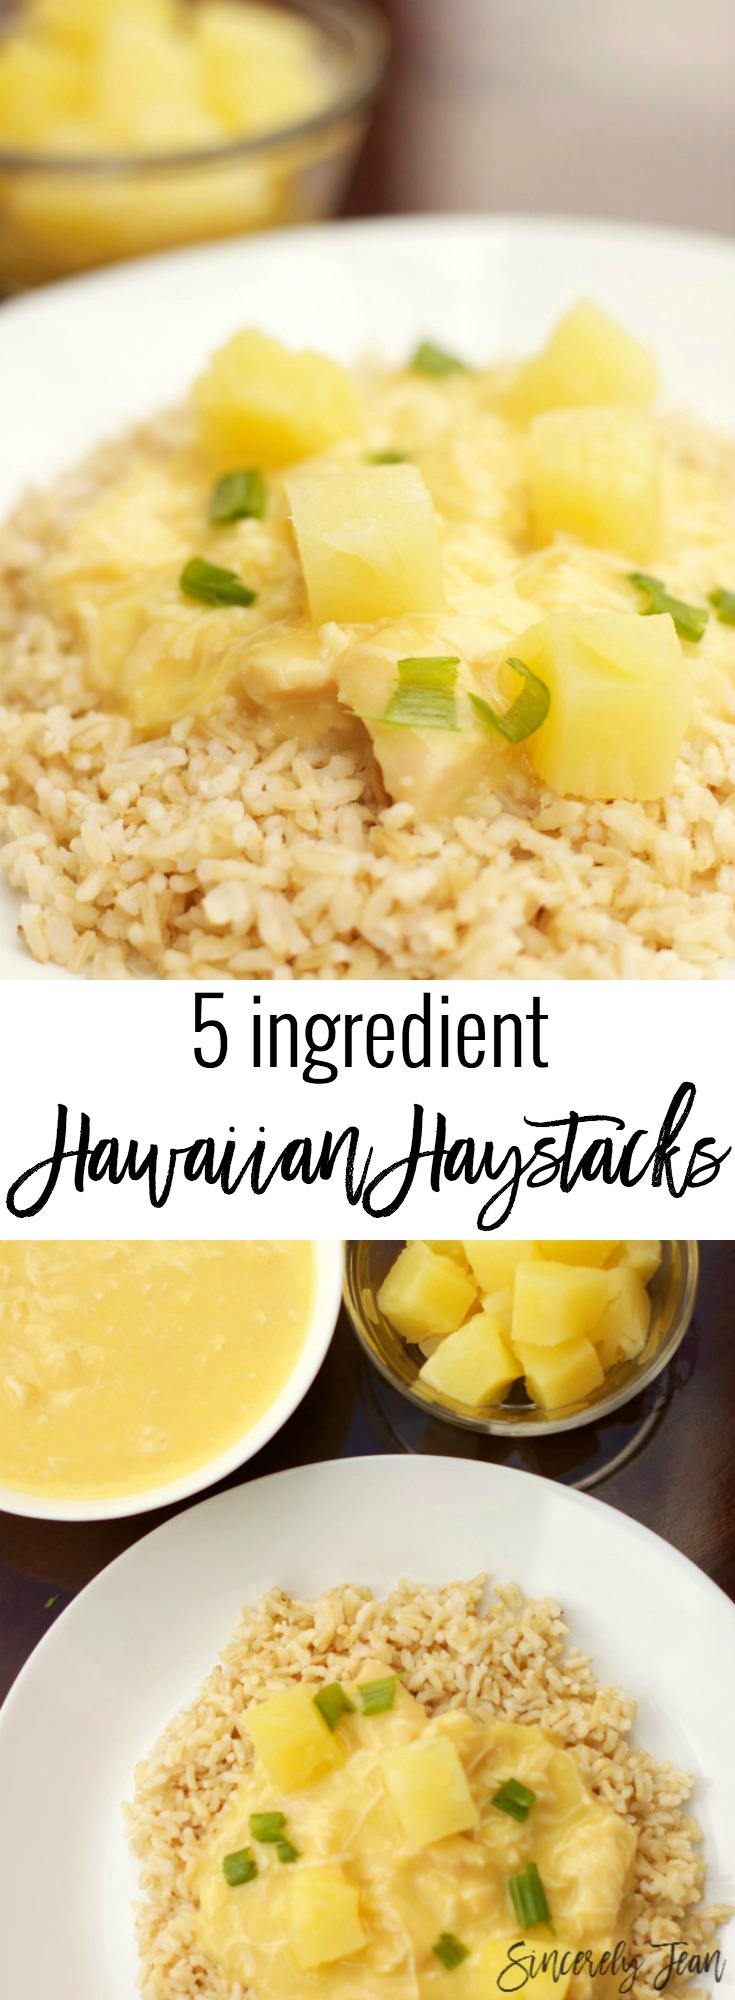 Simple dinners: Five ingredient Hawaiian Haystacks by SincerelyJean.com